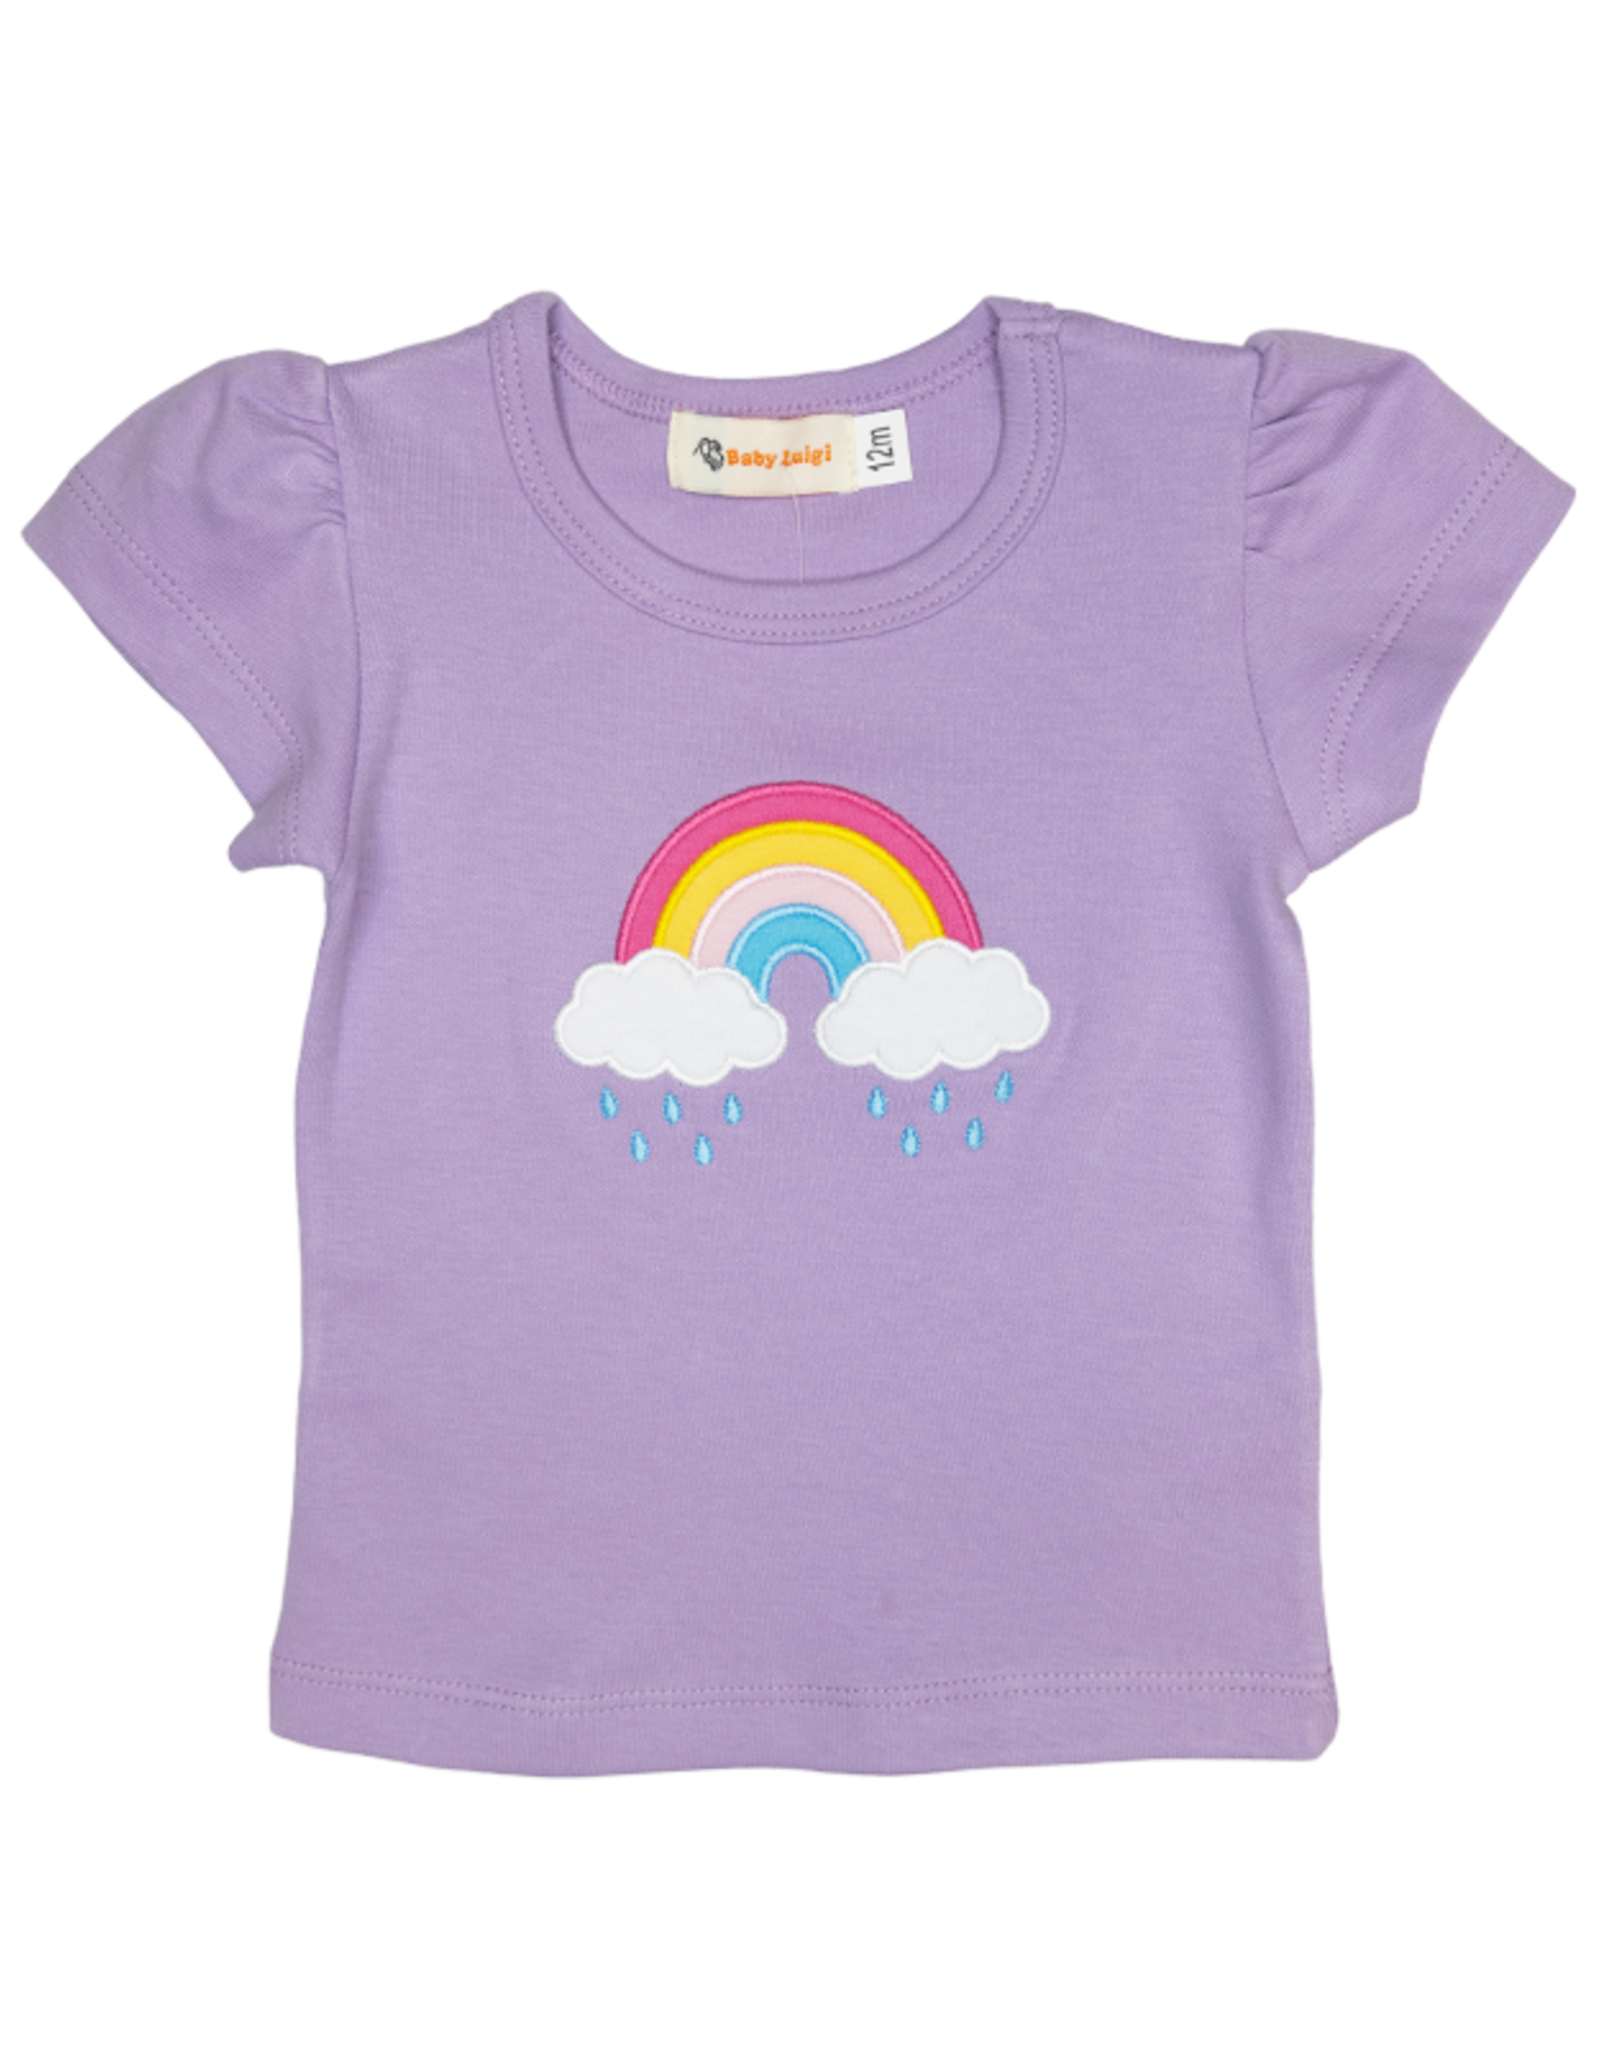 Luigi S24 Lavender Rainbow/Clouds Shirt